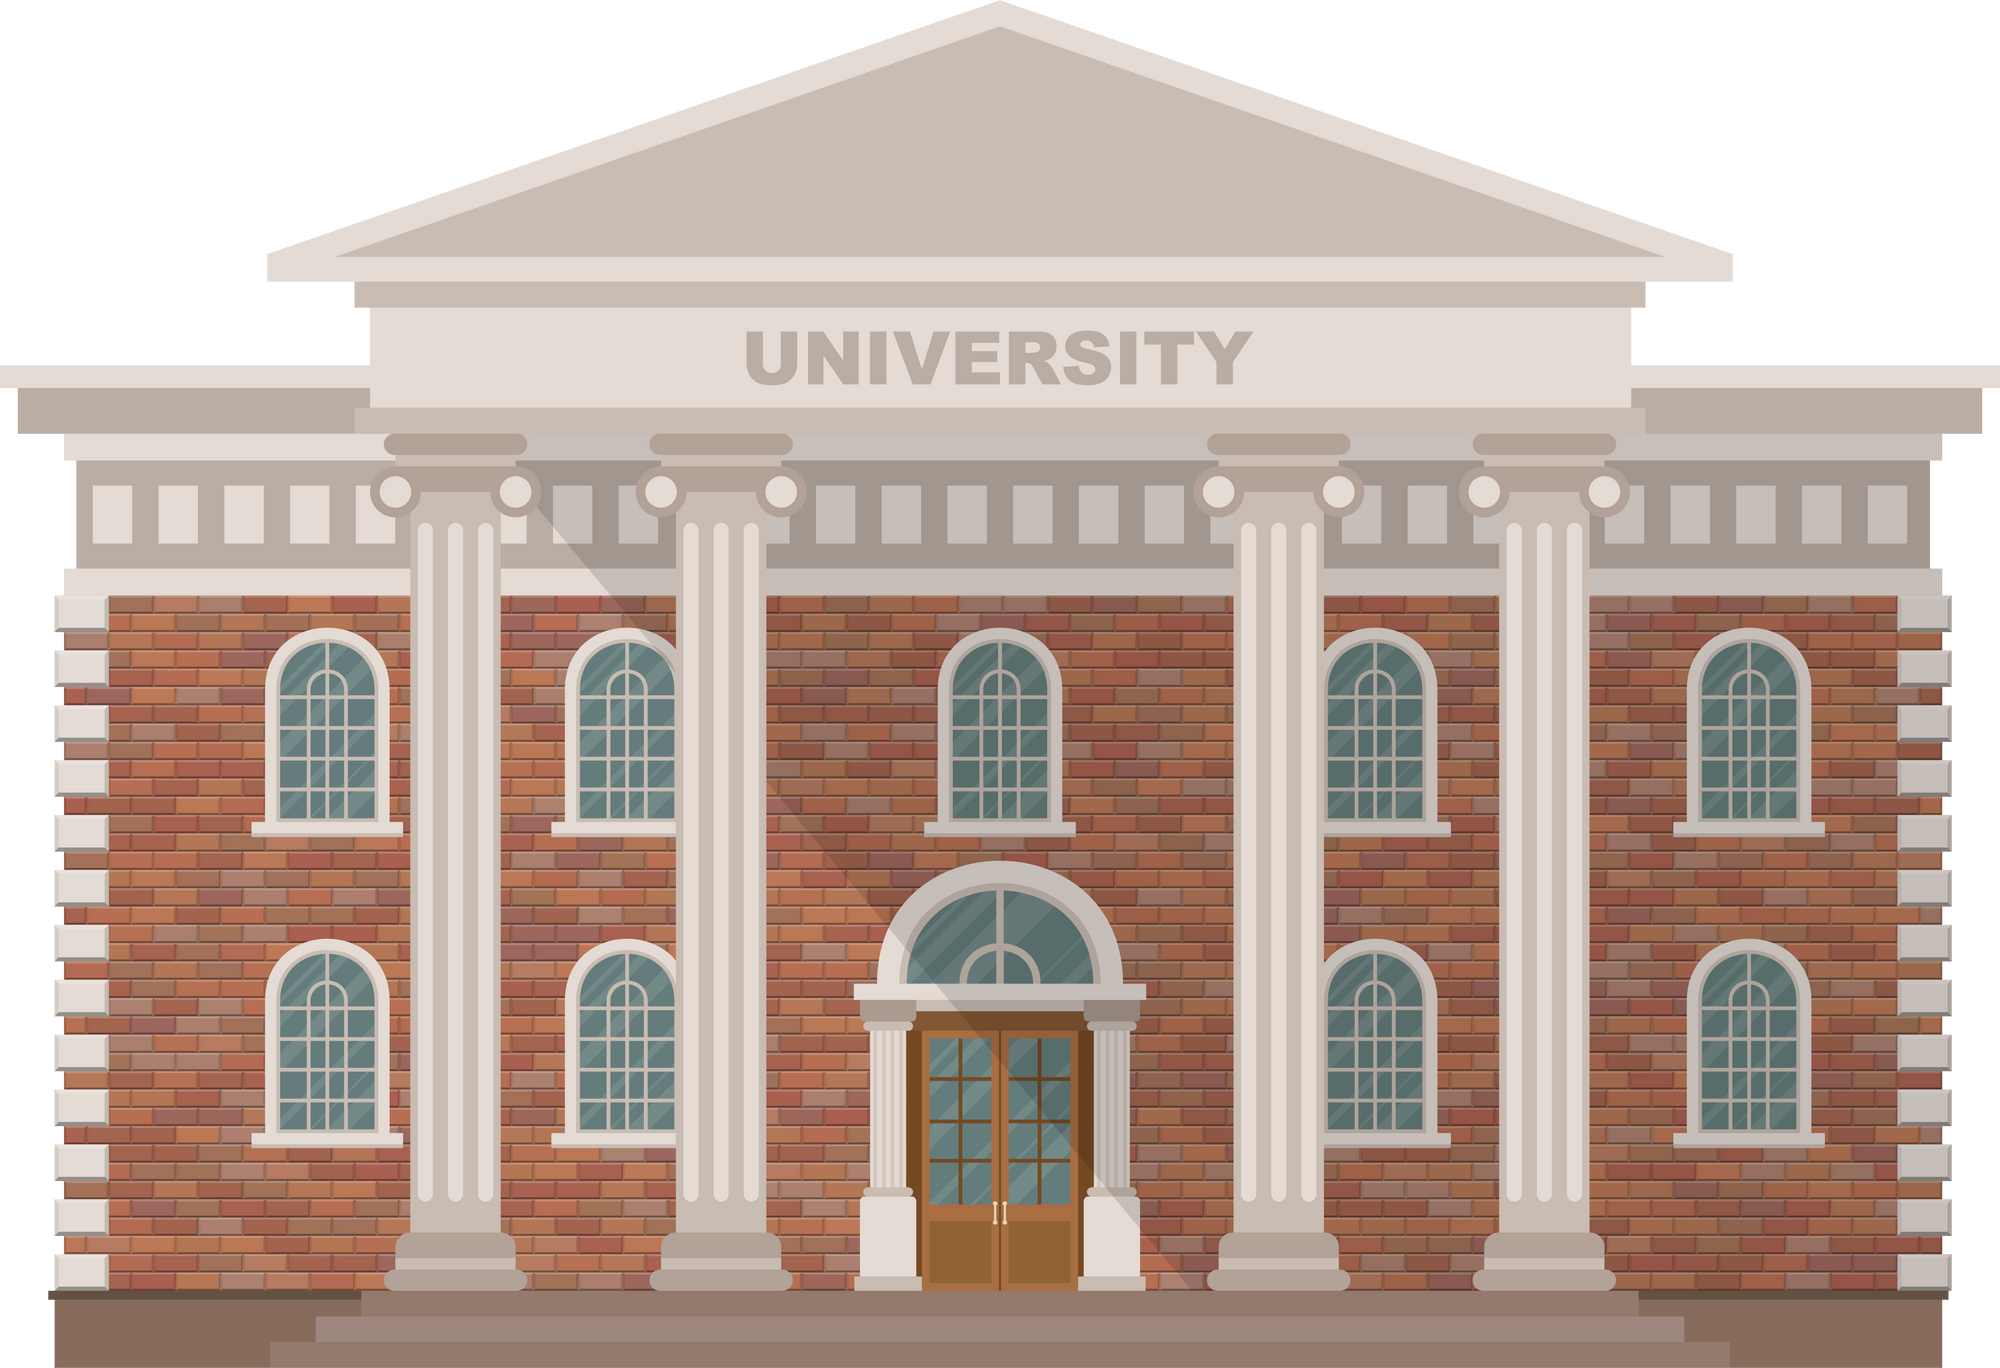 University Building Illustration